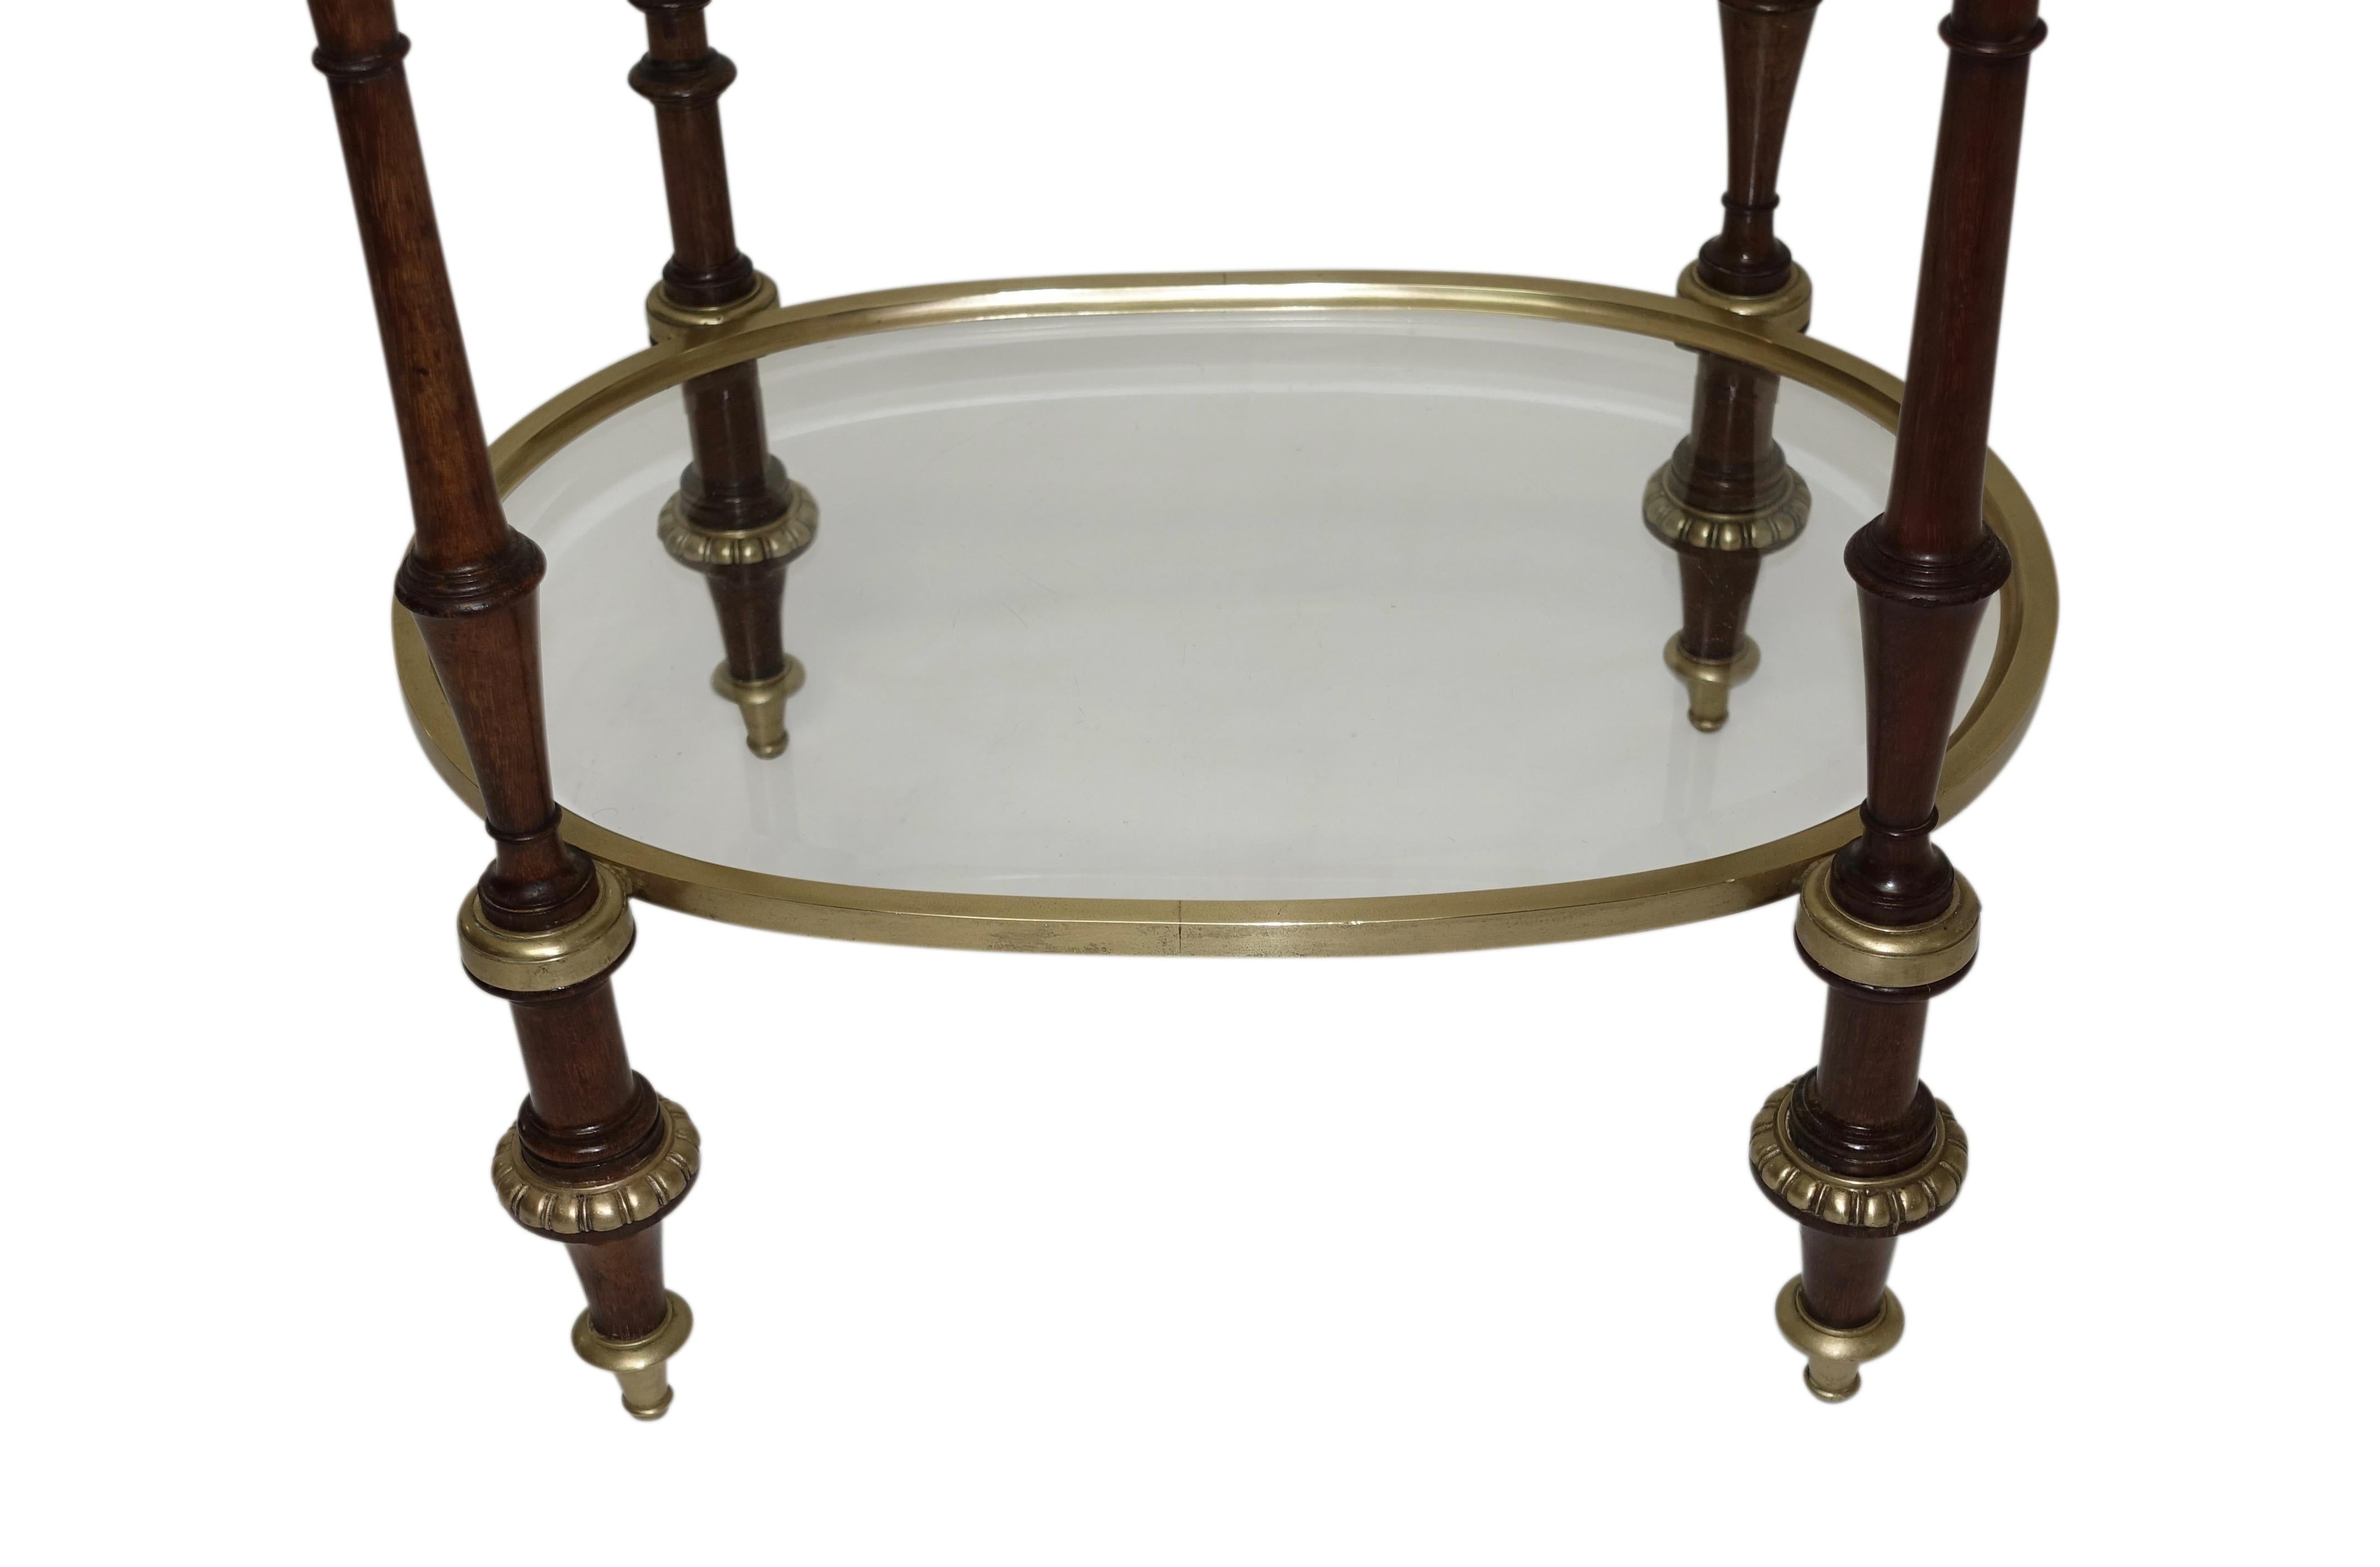 Polished Regency Style Mahogany and Brass Three-Tier Table